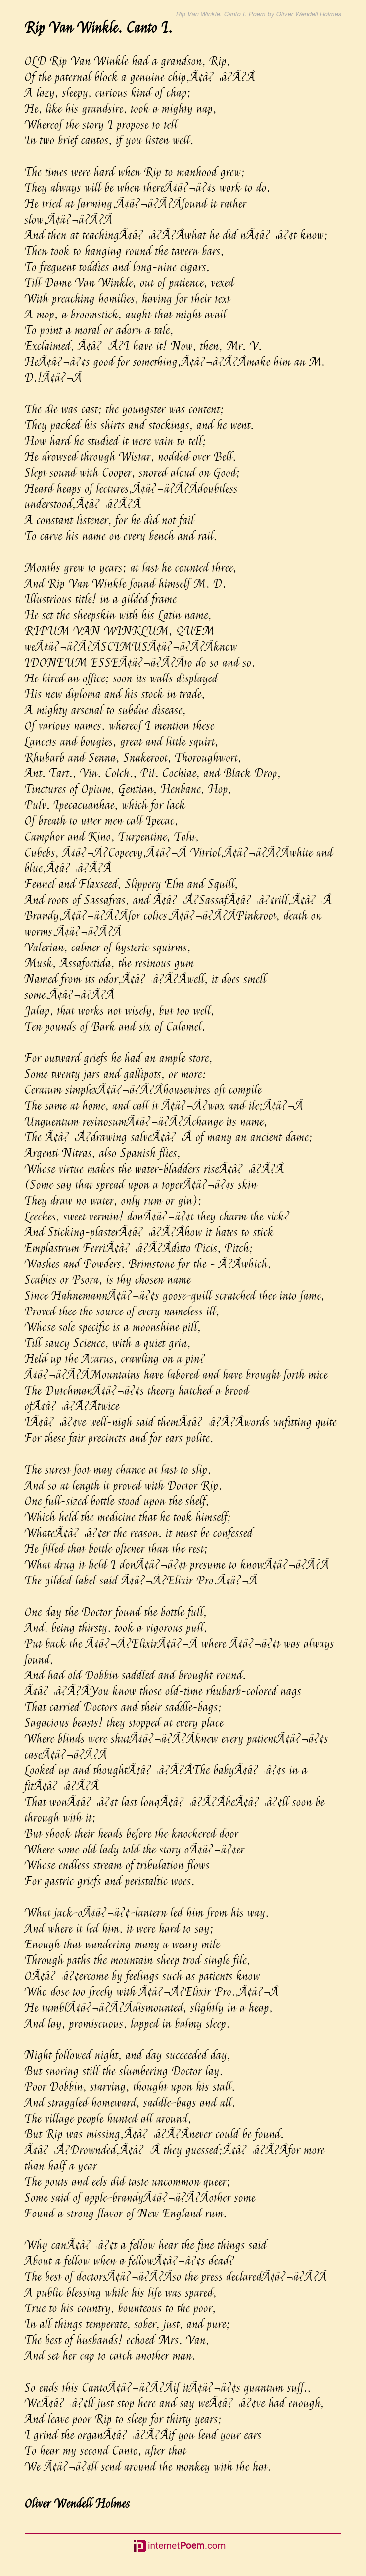 Rip Van Winkle Canto I Poem By Oliver Wendell Holmes